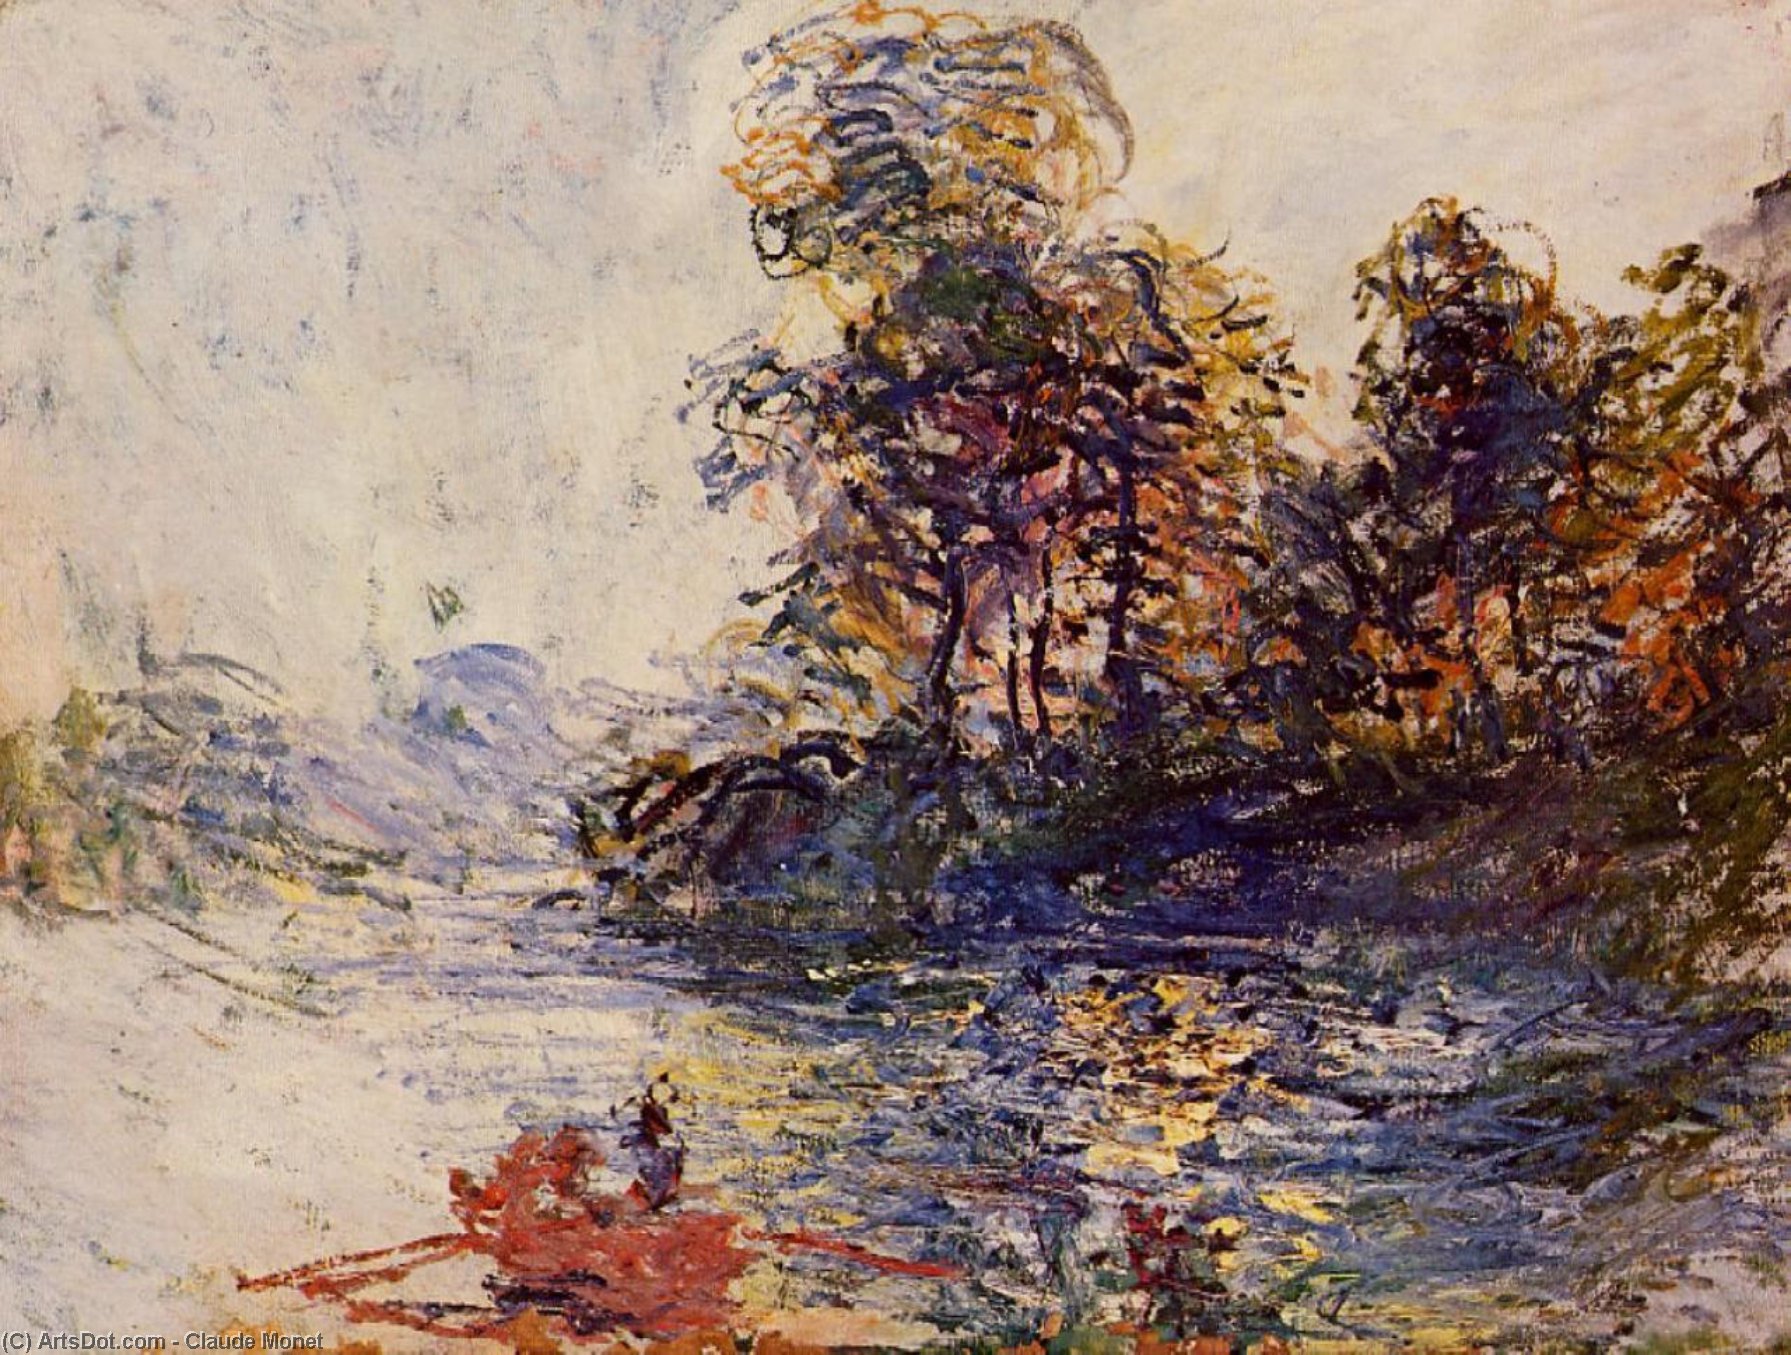  Museum Art Reproductions The River, 1881 by Claude Monet (1840-1926, France) | ArtsDot.com